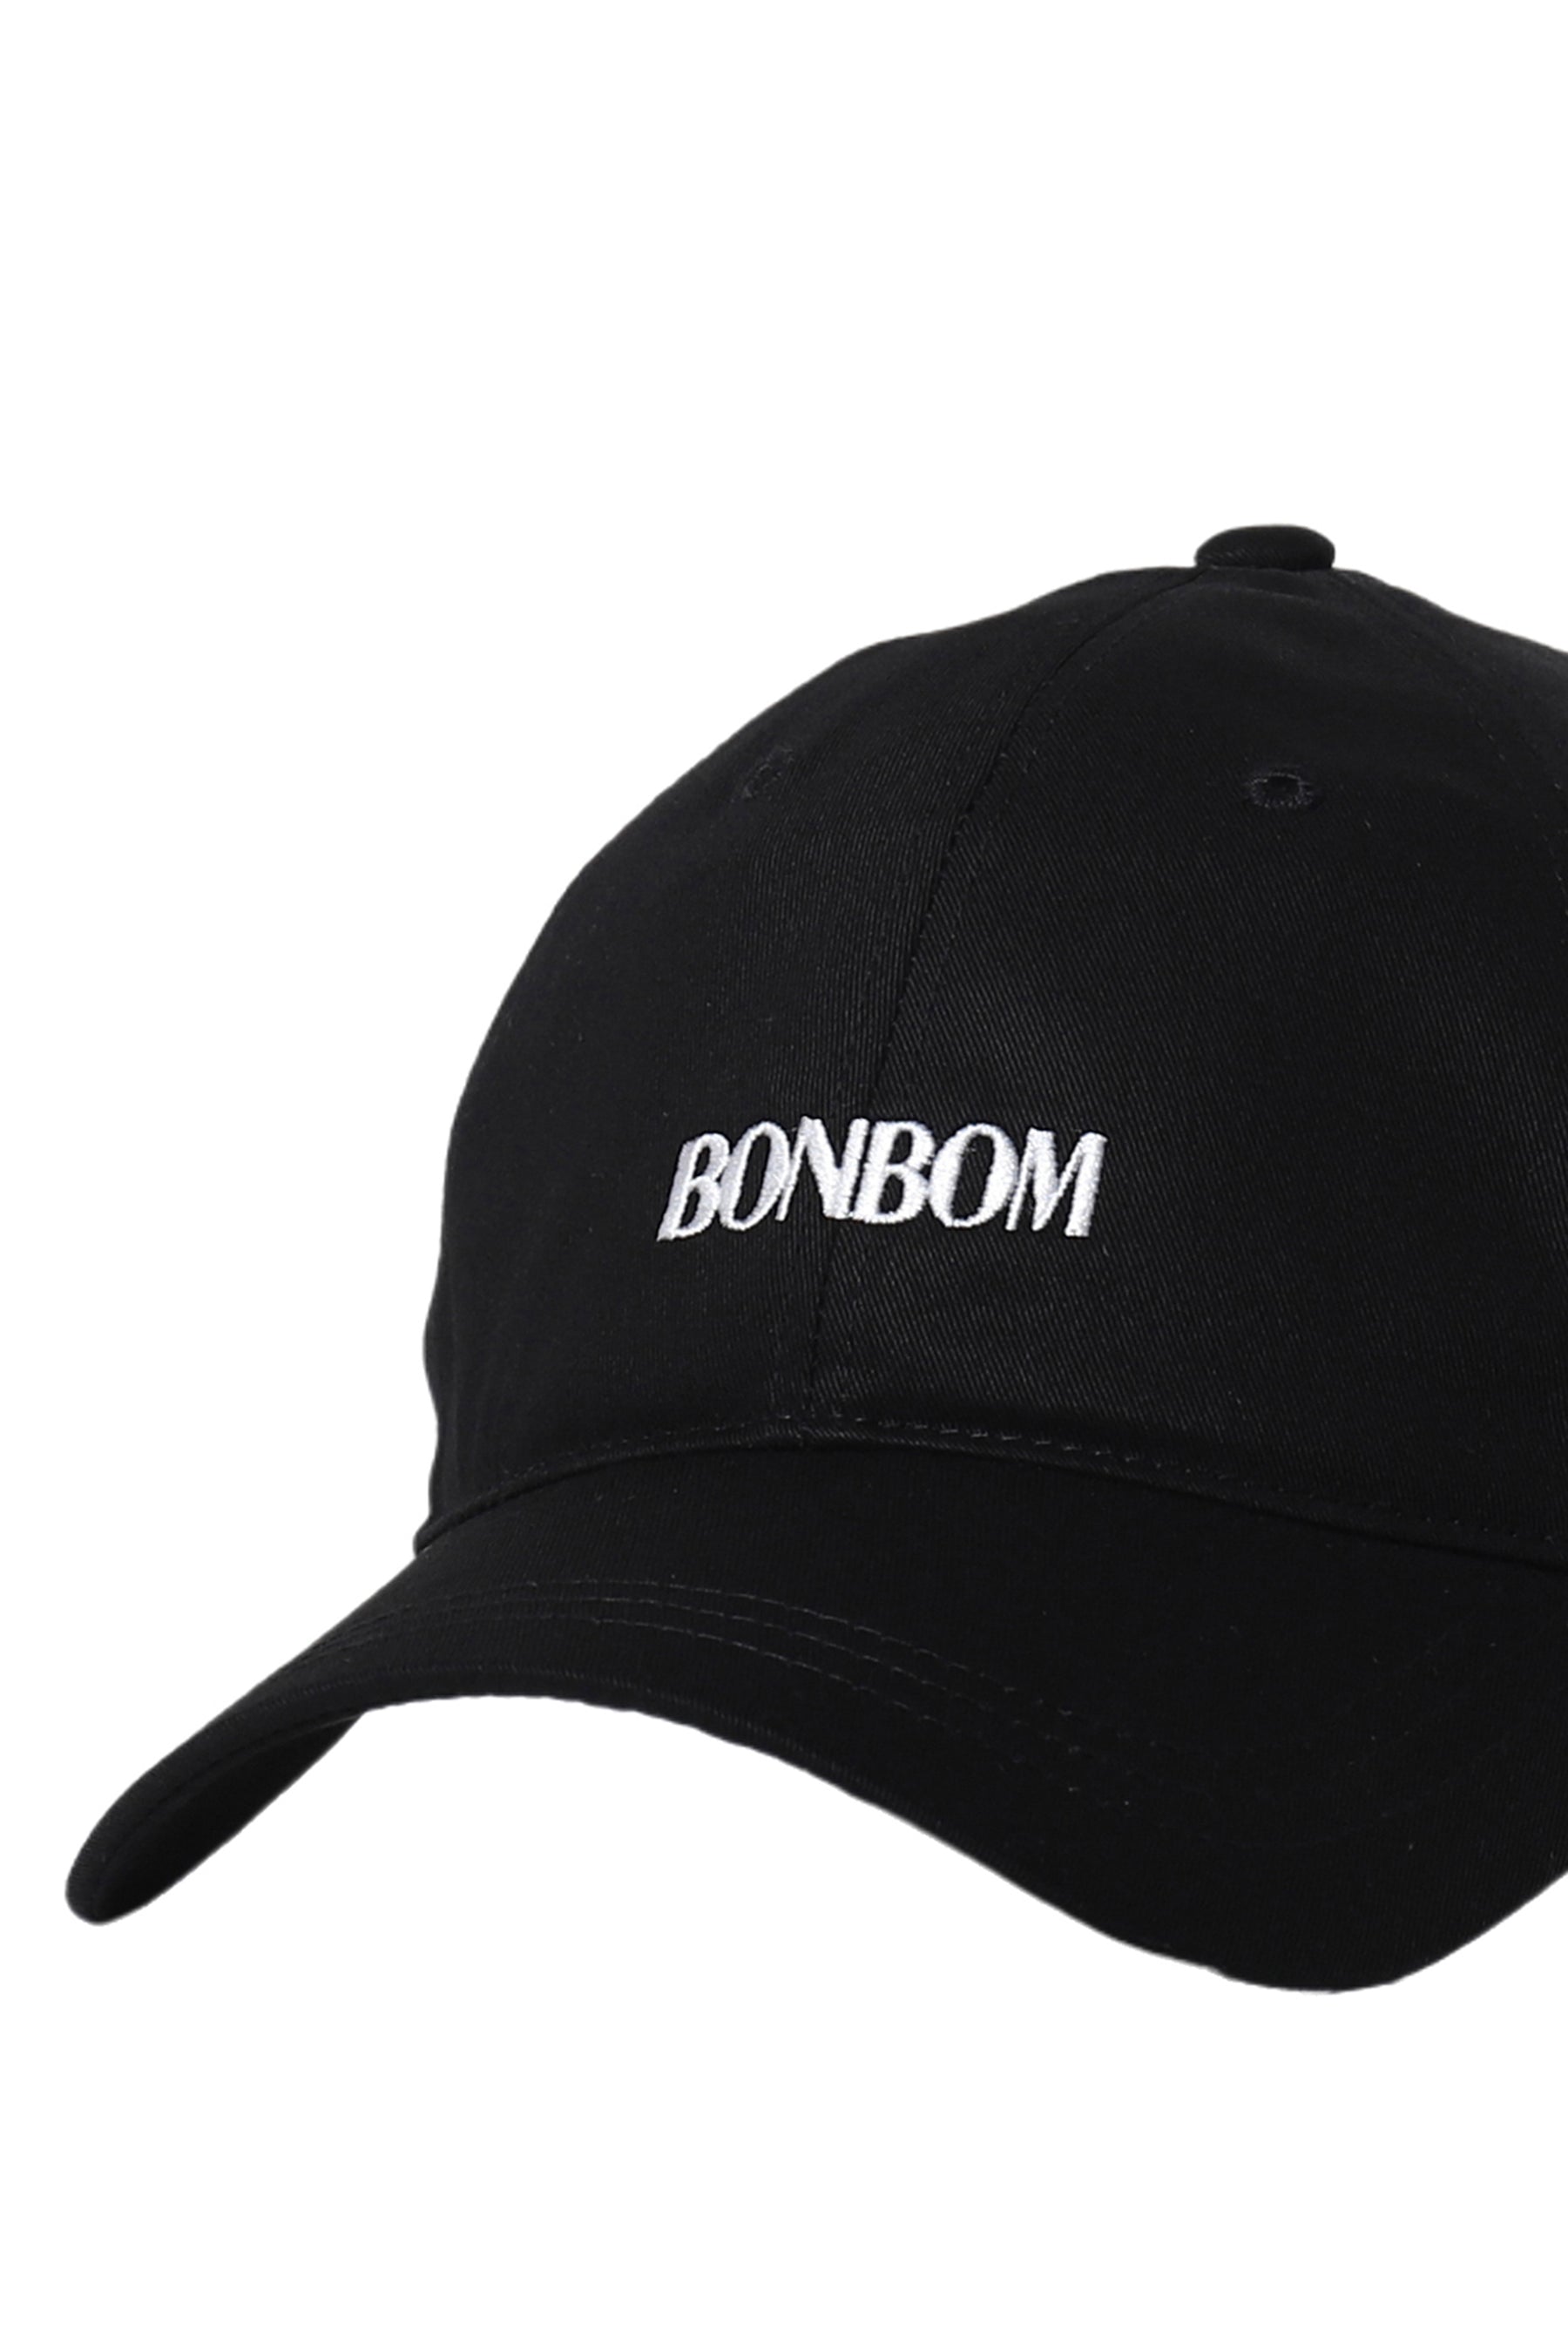 BONBOM LOGO CAP / BLK